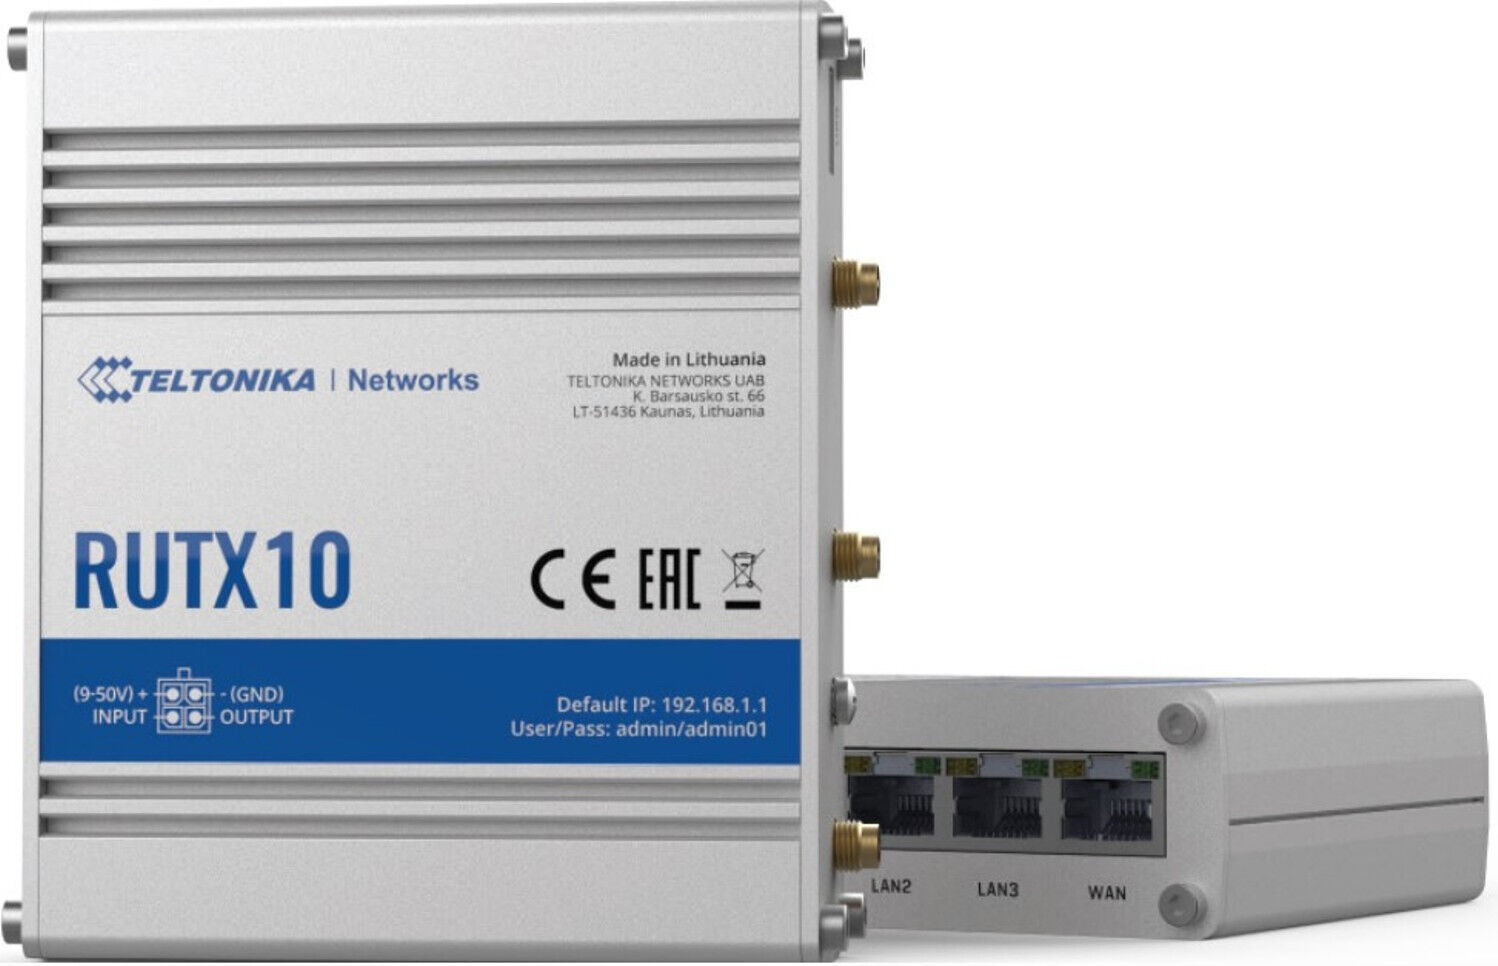 Teltonika RUTX10 000000 Professional Ethernet Router with Euro PSU